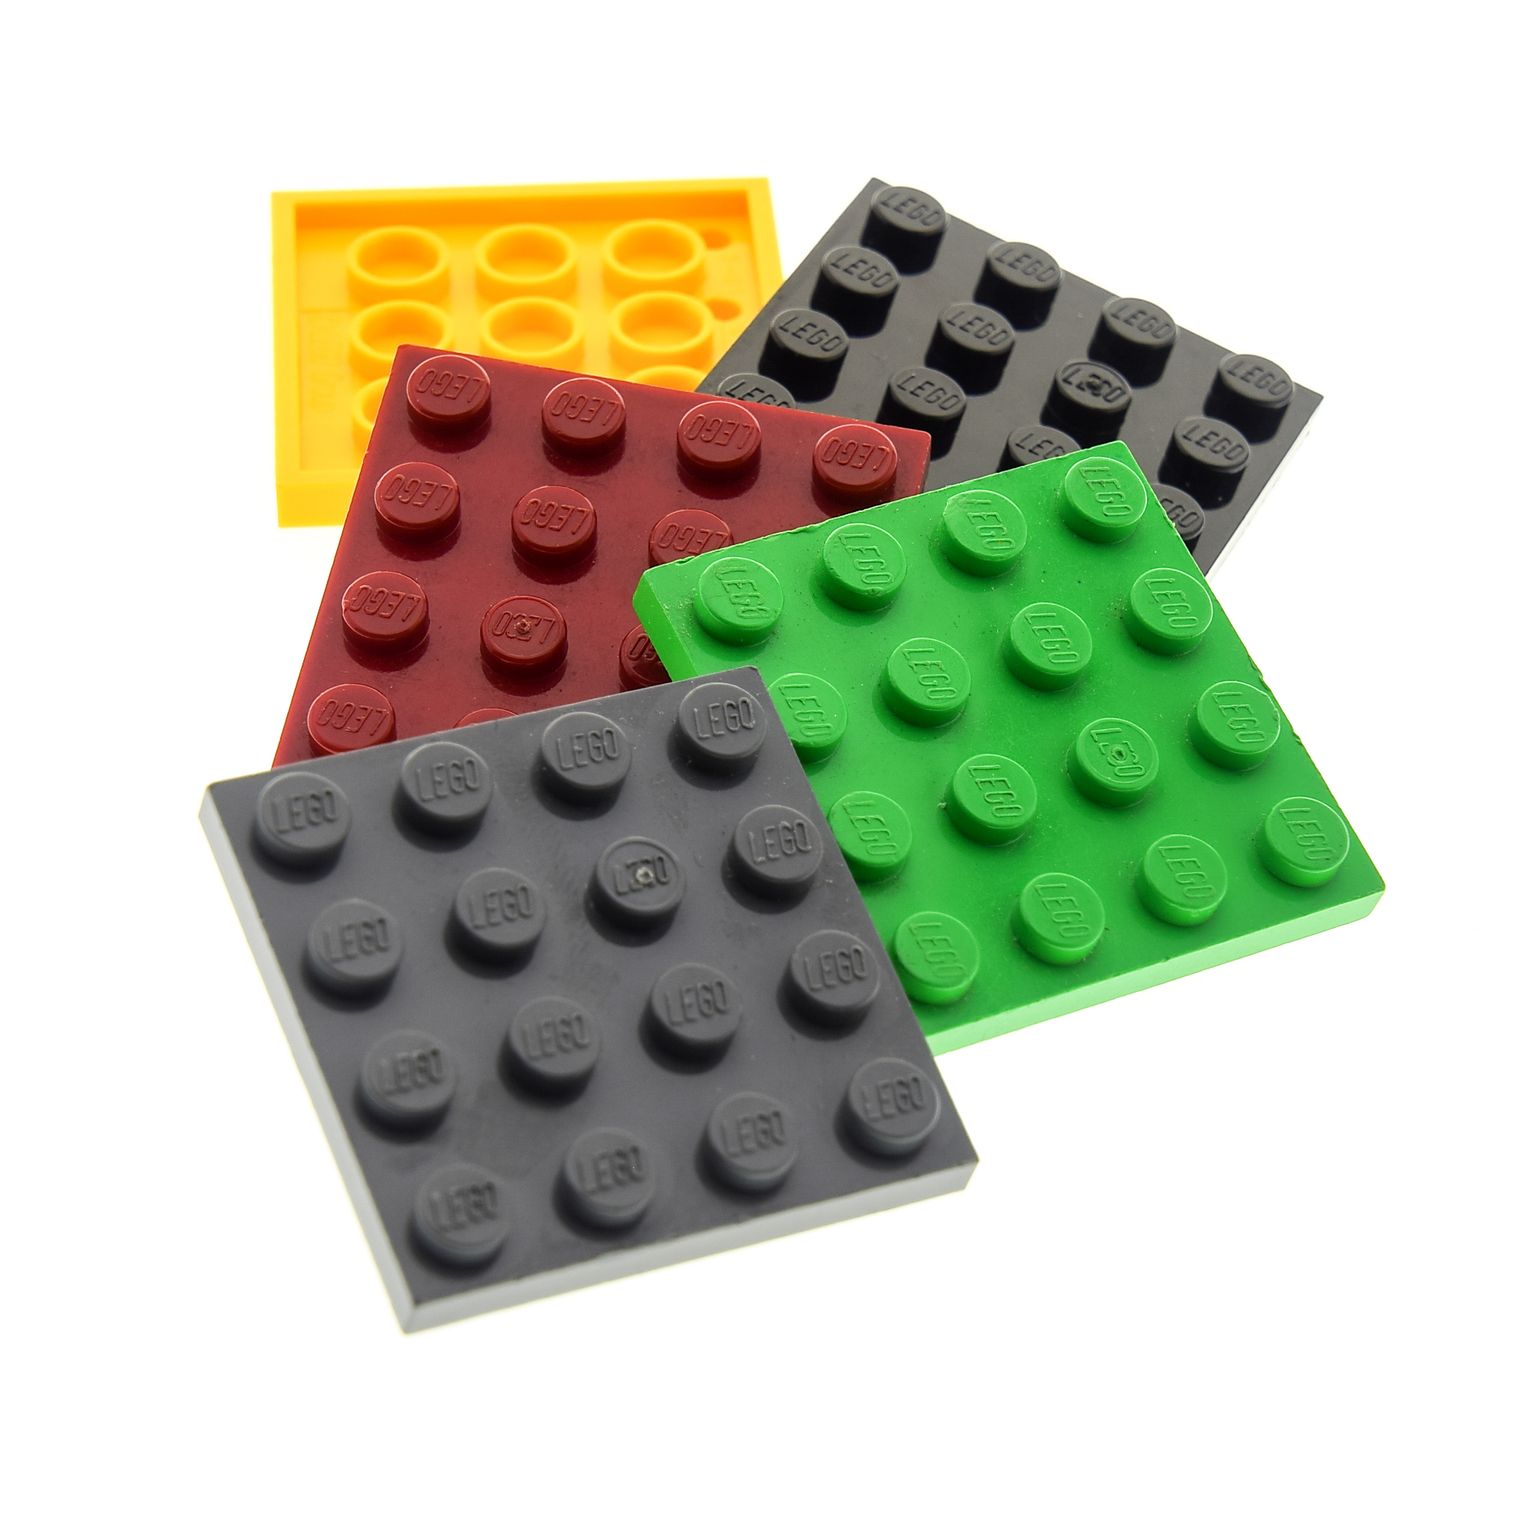 Neuware 4 x LEGO® 3031 City,Bau-Platte in 4 x 4 braun wie abgebildet